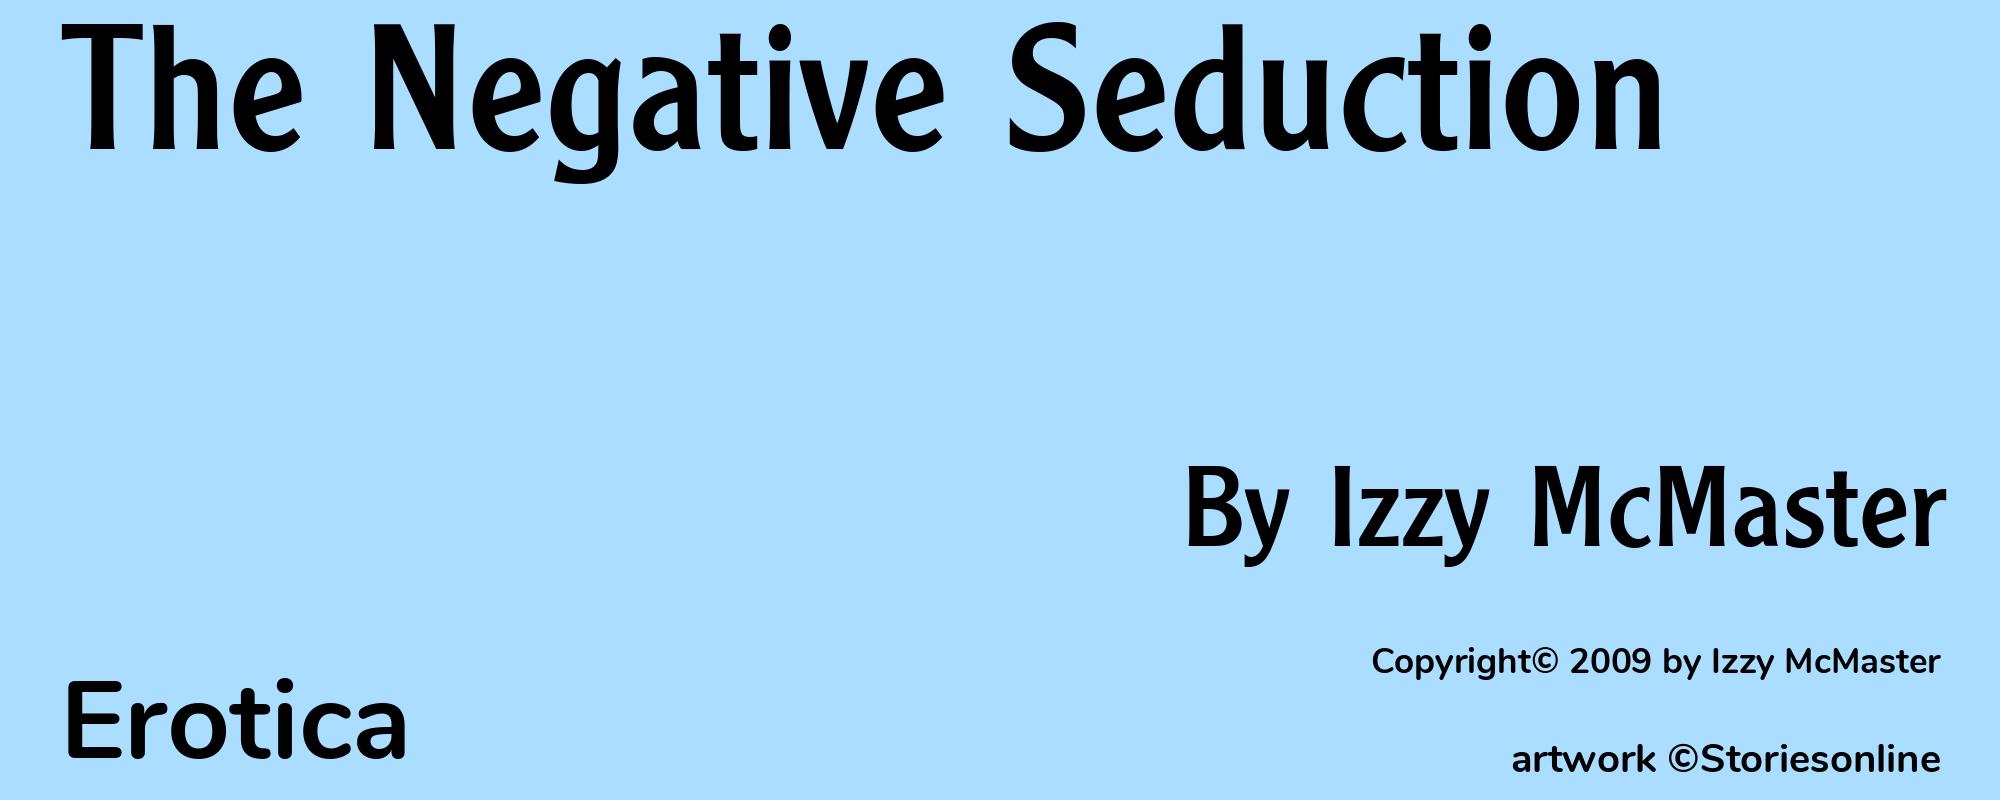 The Negative Seduction - Cover